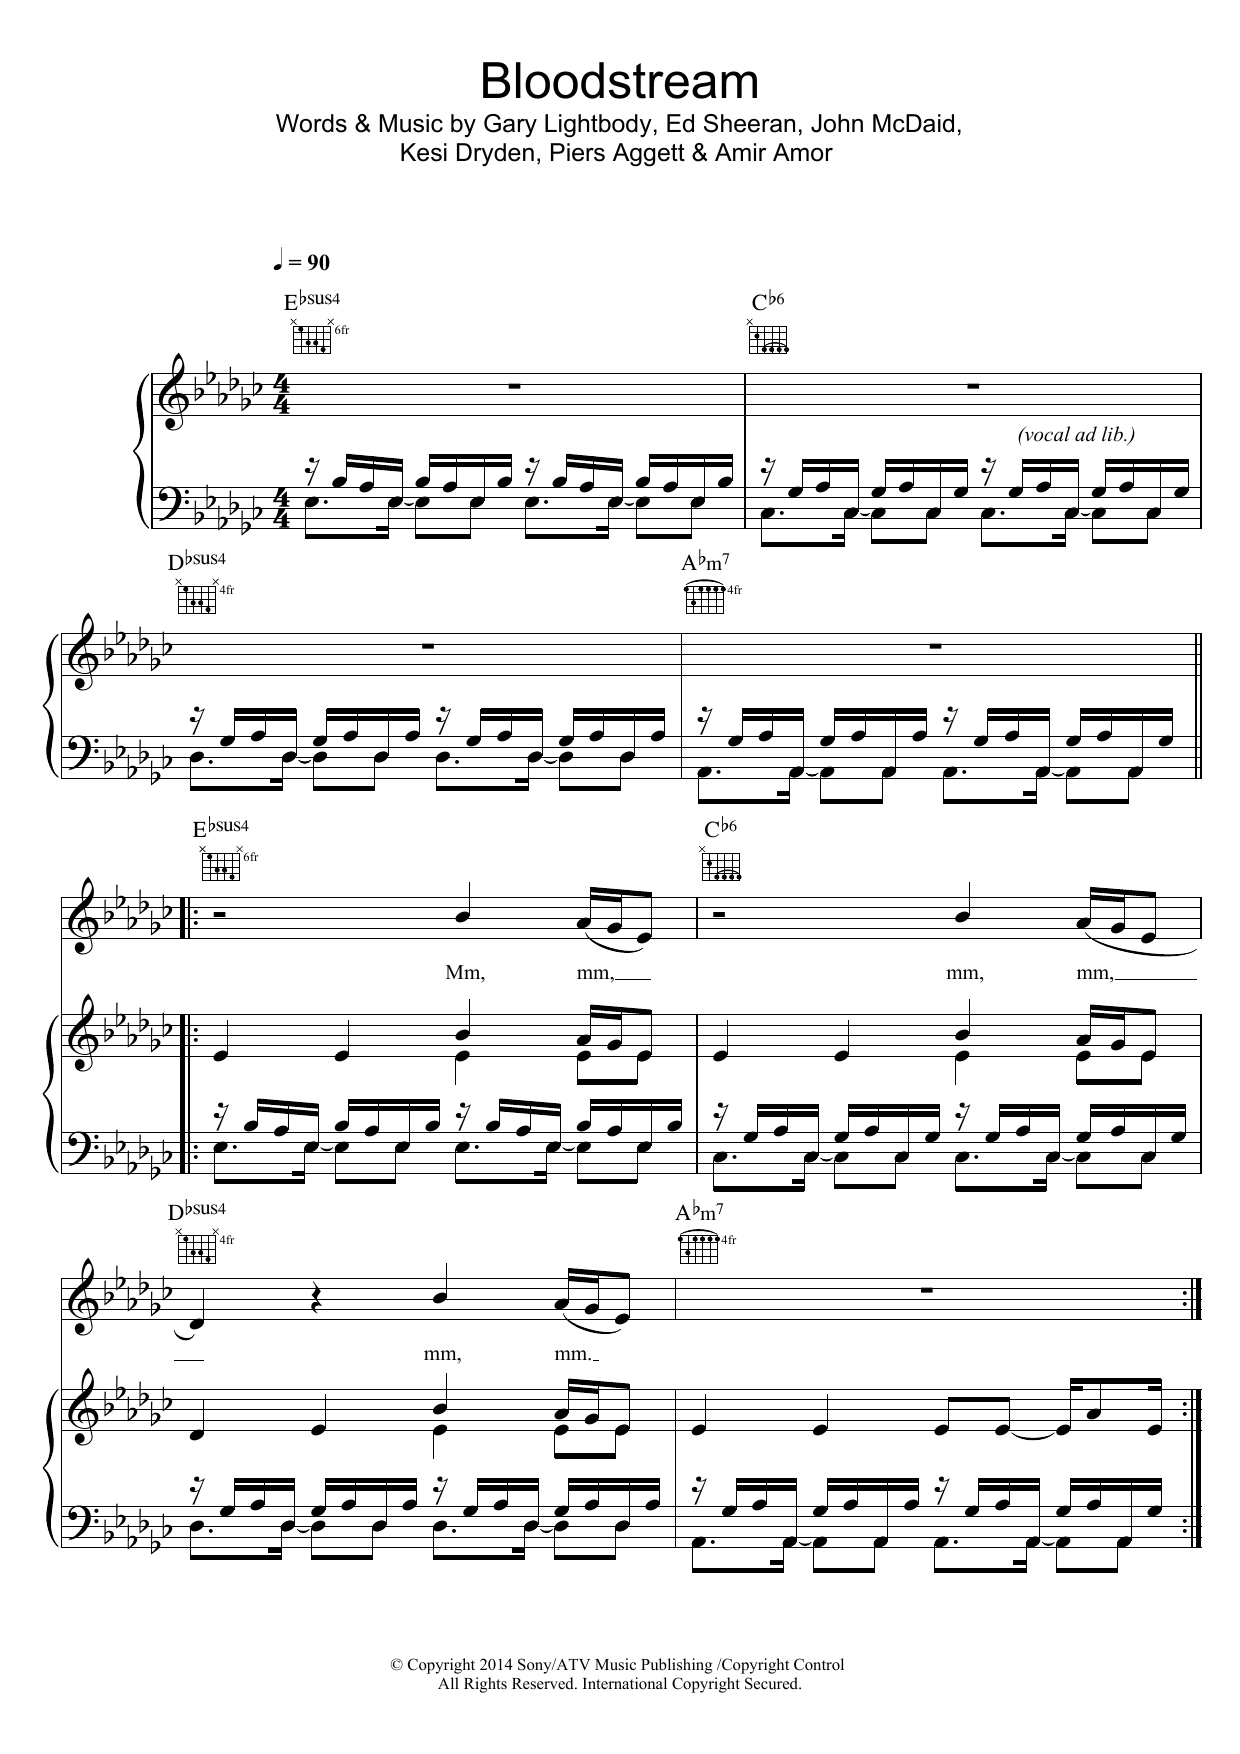 Ed Sheeran Bloodstream Sheet Music Notes & Chords for Beginner Piano - Download or Print PDF